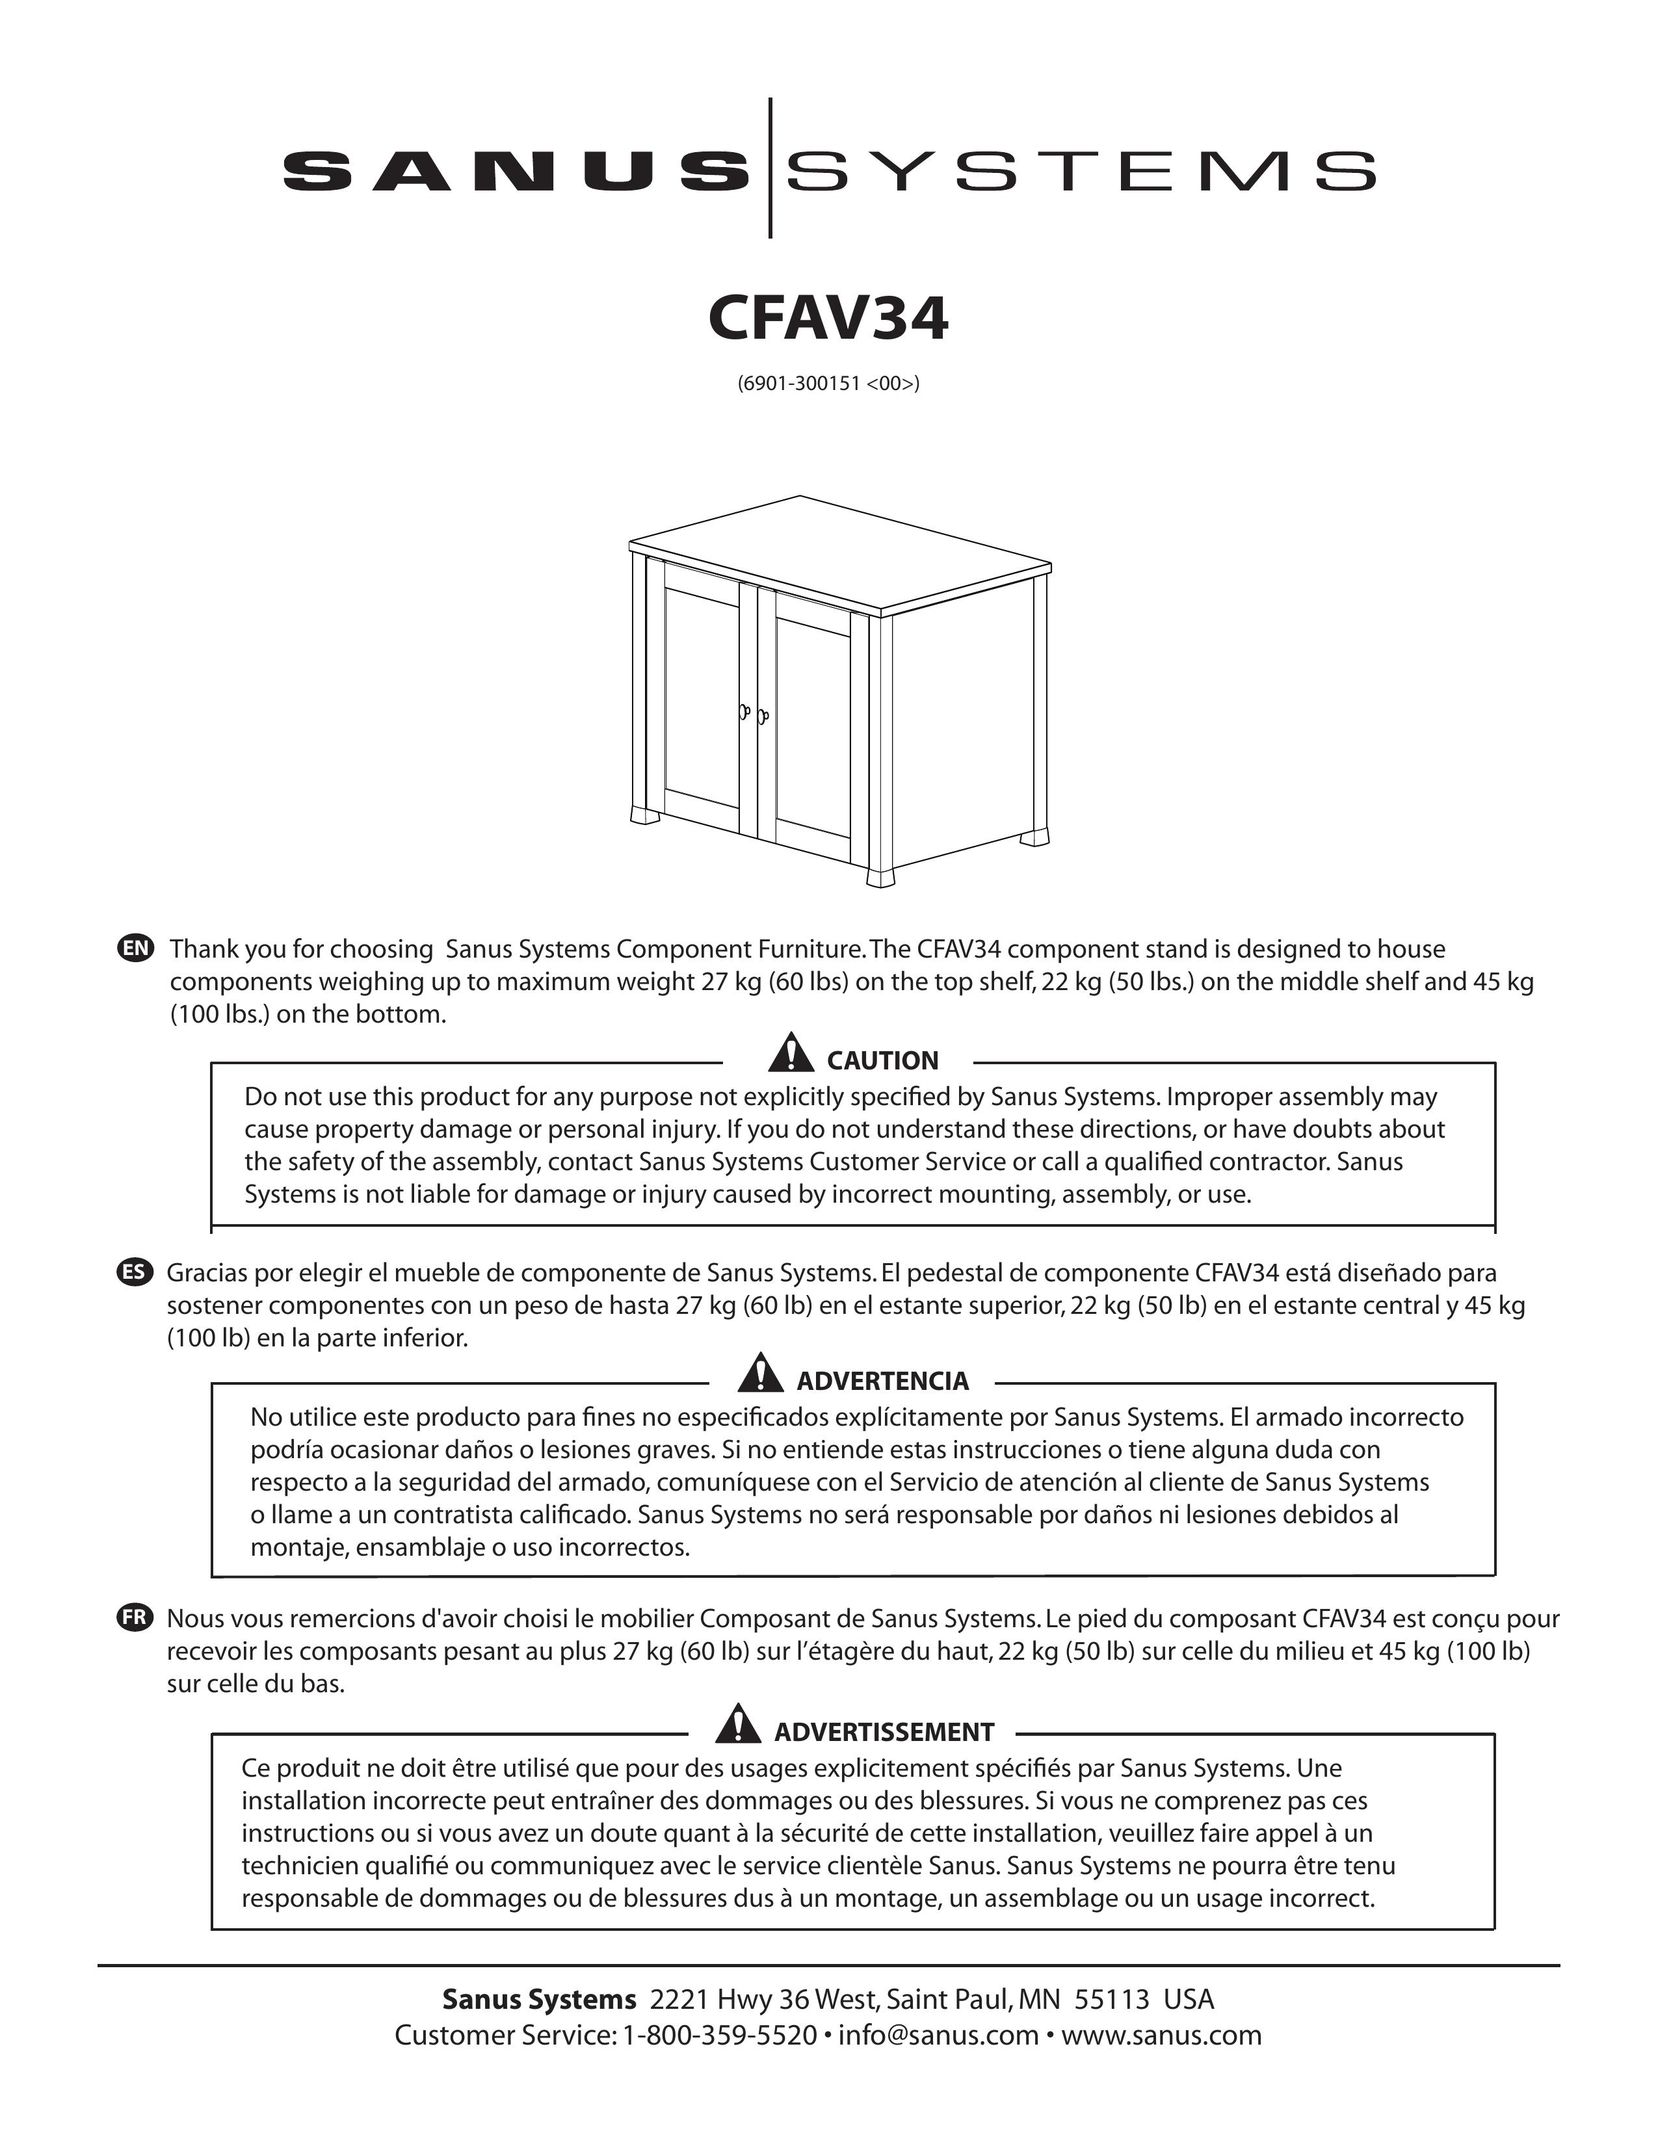 Sanus Systems CFAV34 Indoor Furnishings User Manual